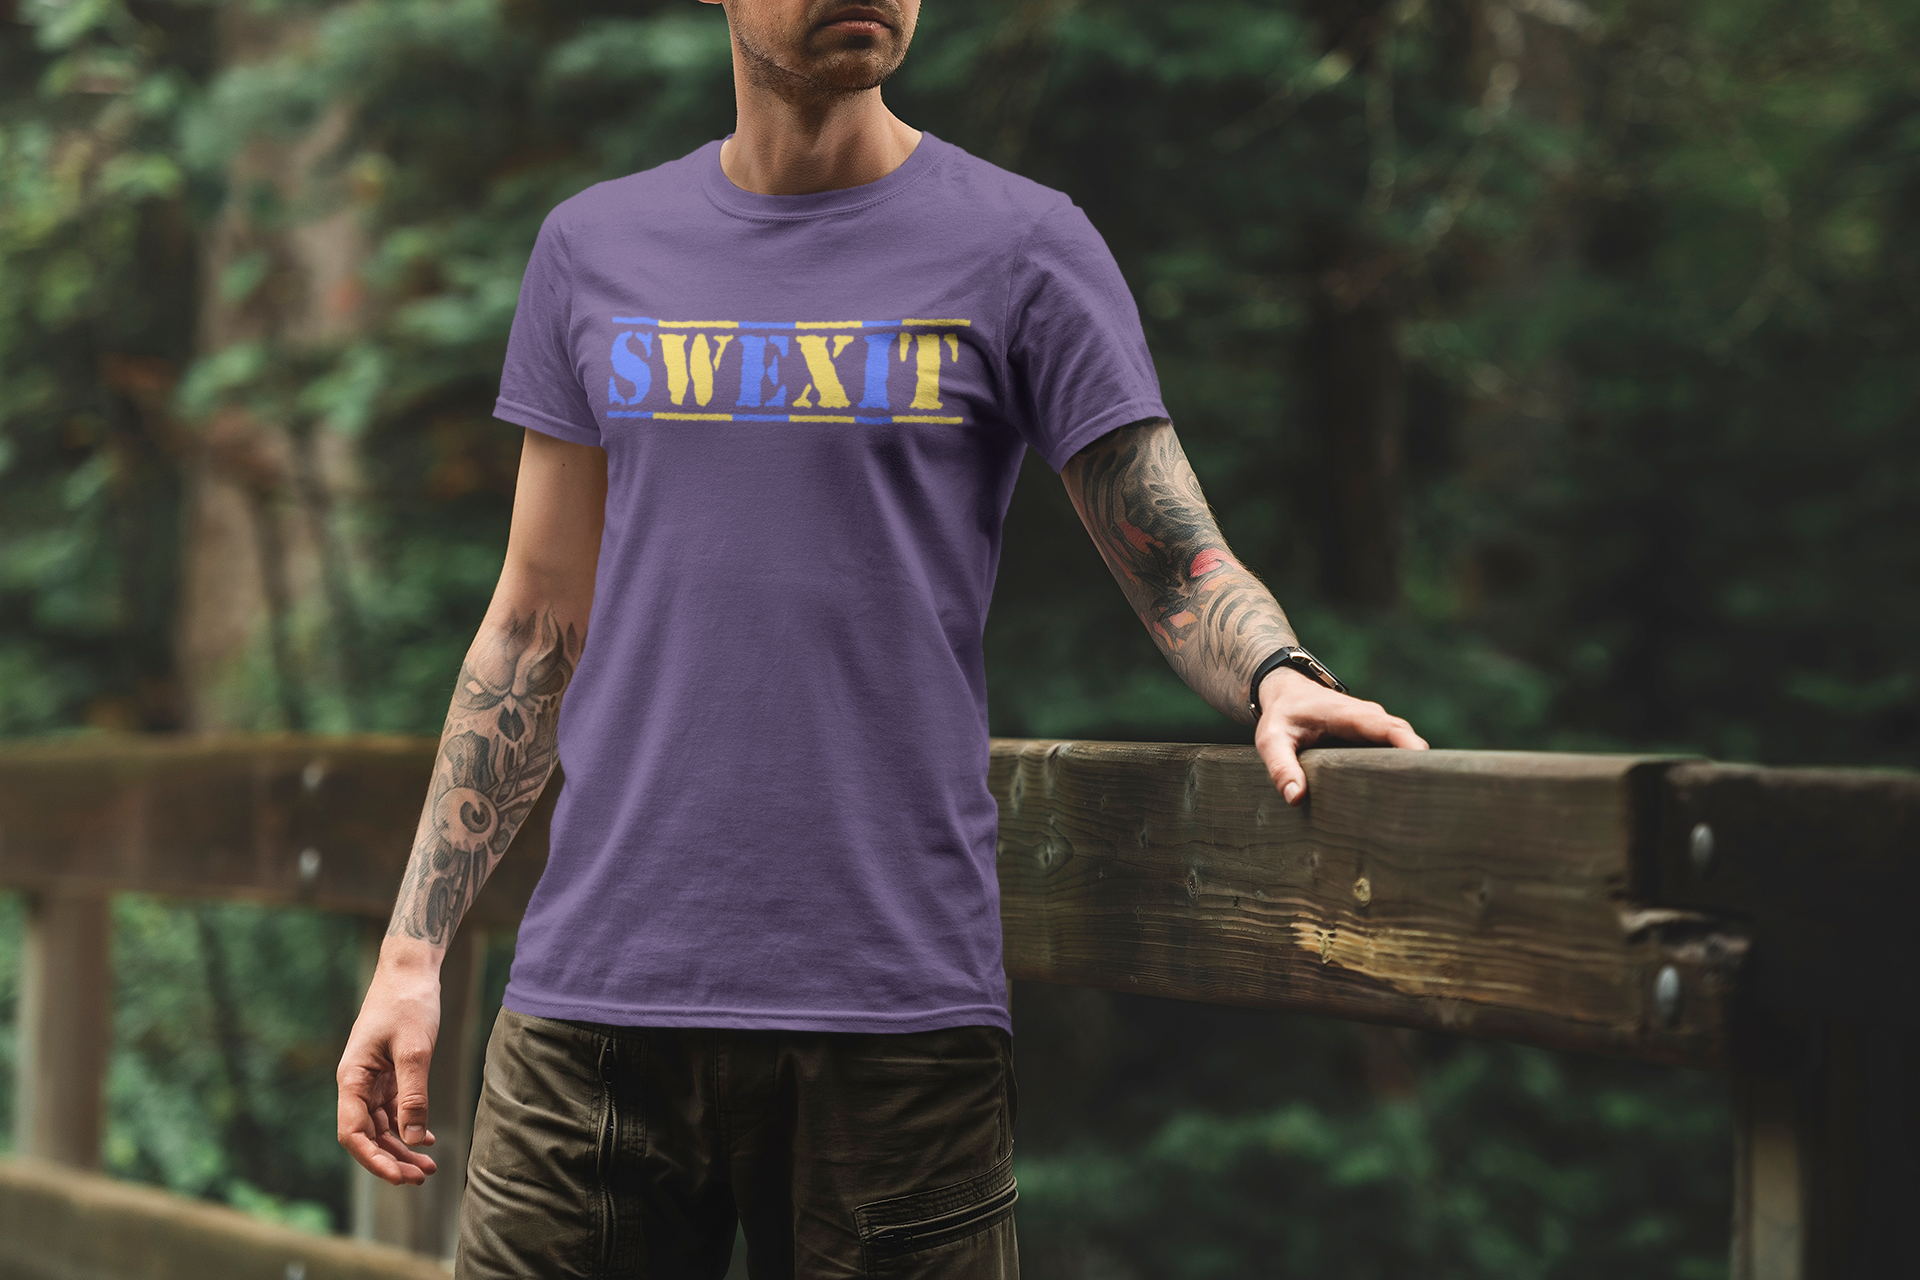 Köp din Swexit T-Shirt hos Statements Clothing